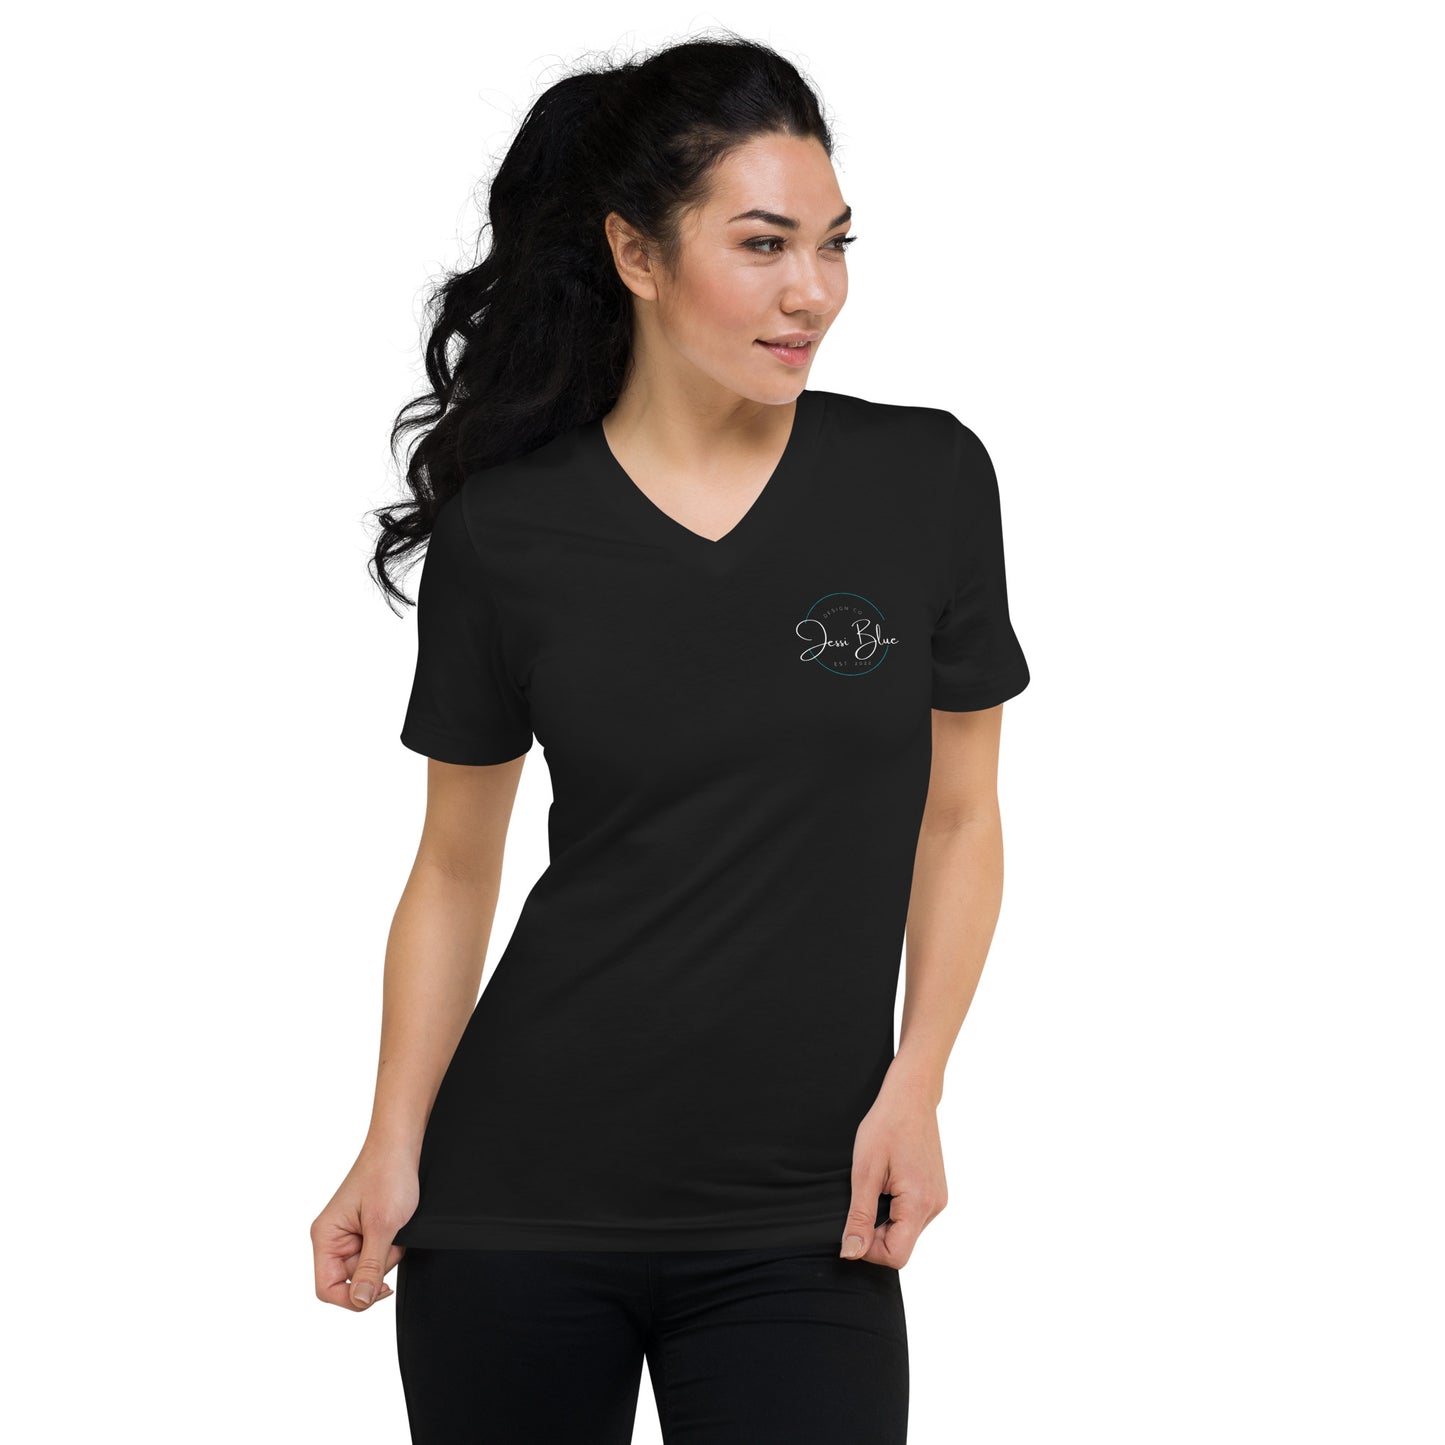 Jessi Blue Design Co. Unisex Short Sleeve V-Neck T-Shirt